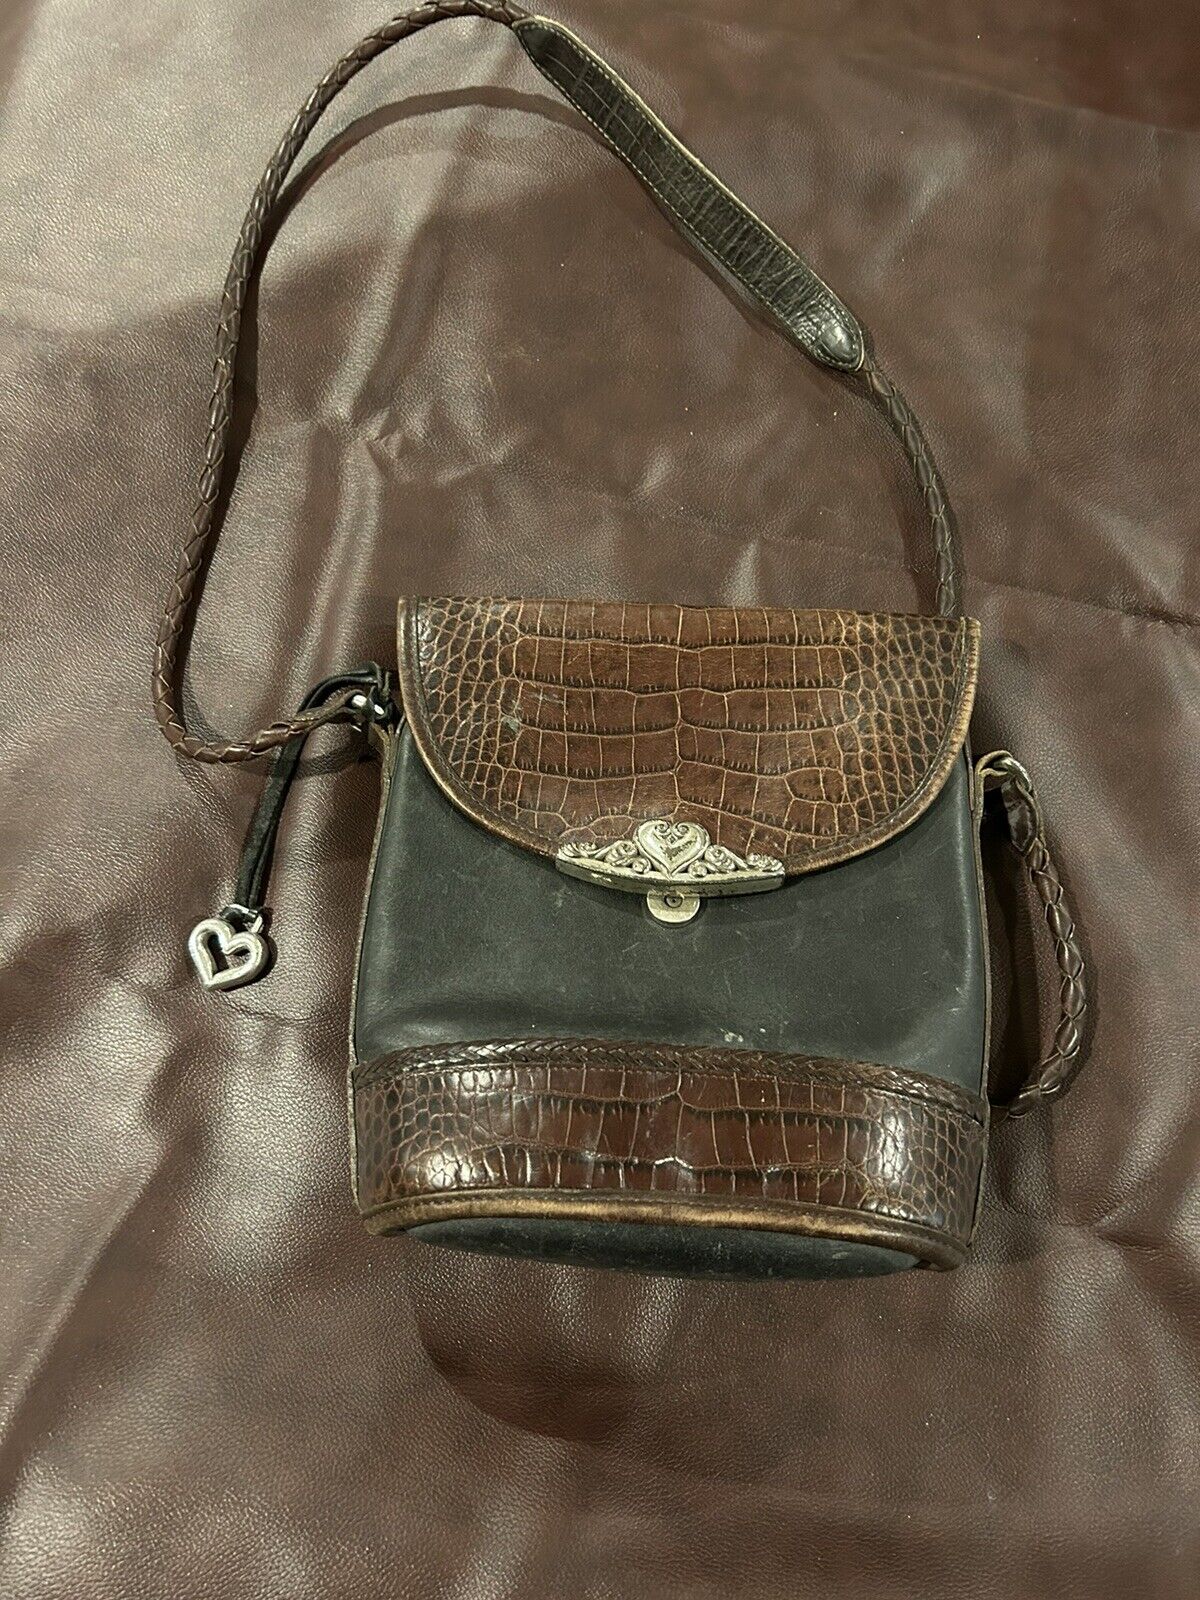 brighton leather handbag black and brown #032334 - image 2